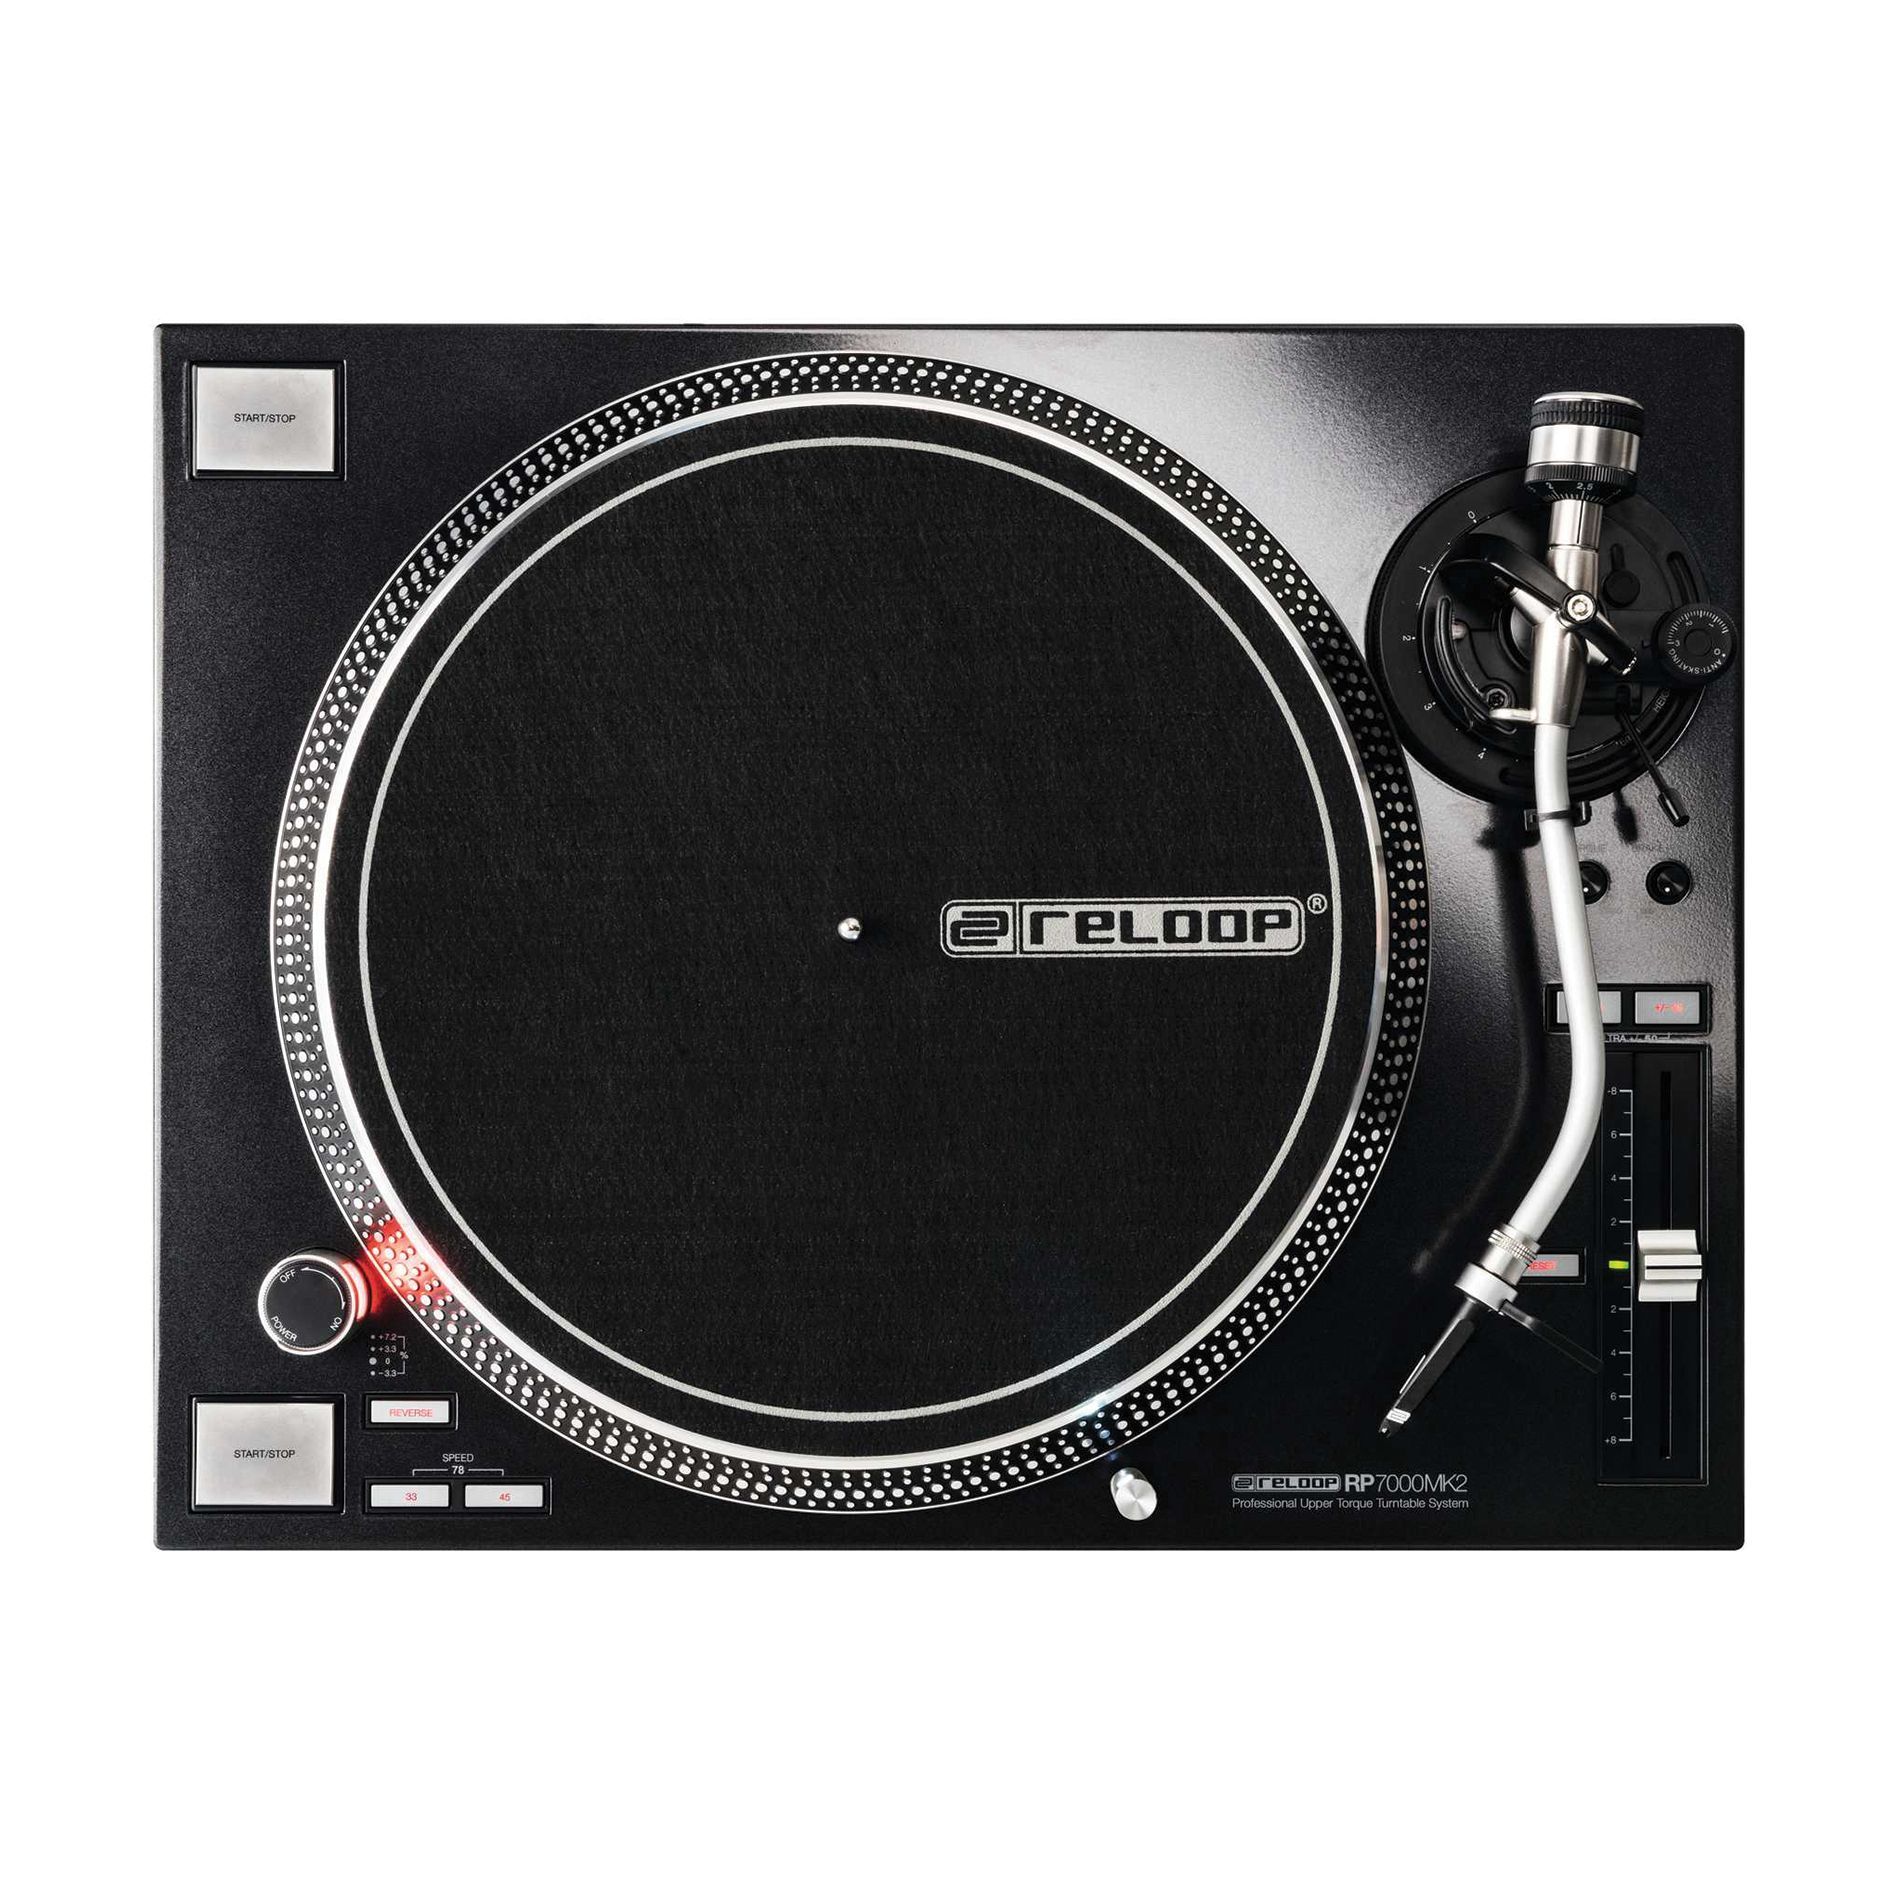 Reloop Rp-7000 Mk2 Black X2 - Full DJ set - Variation 1